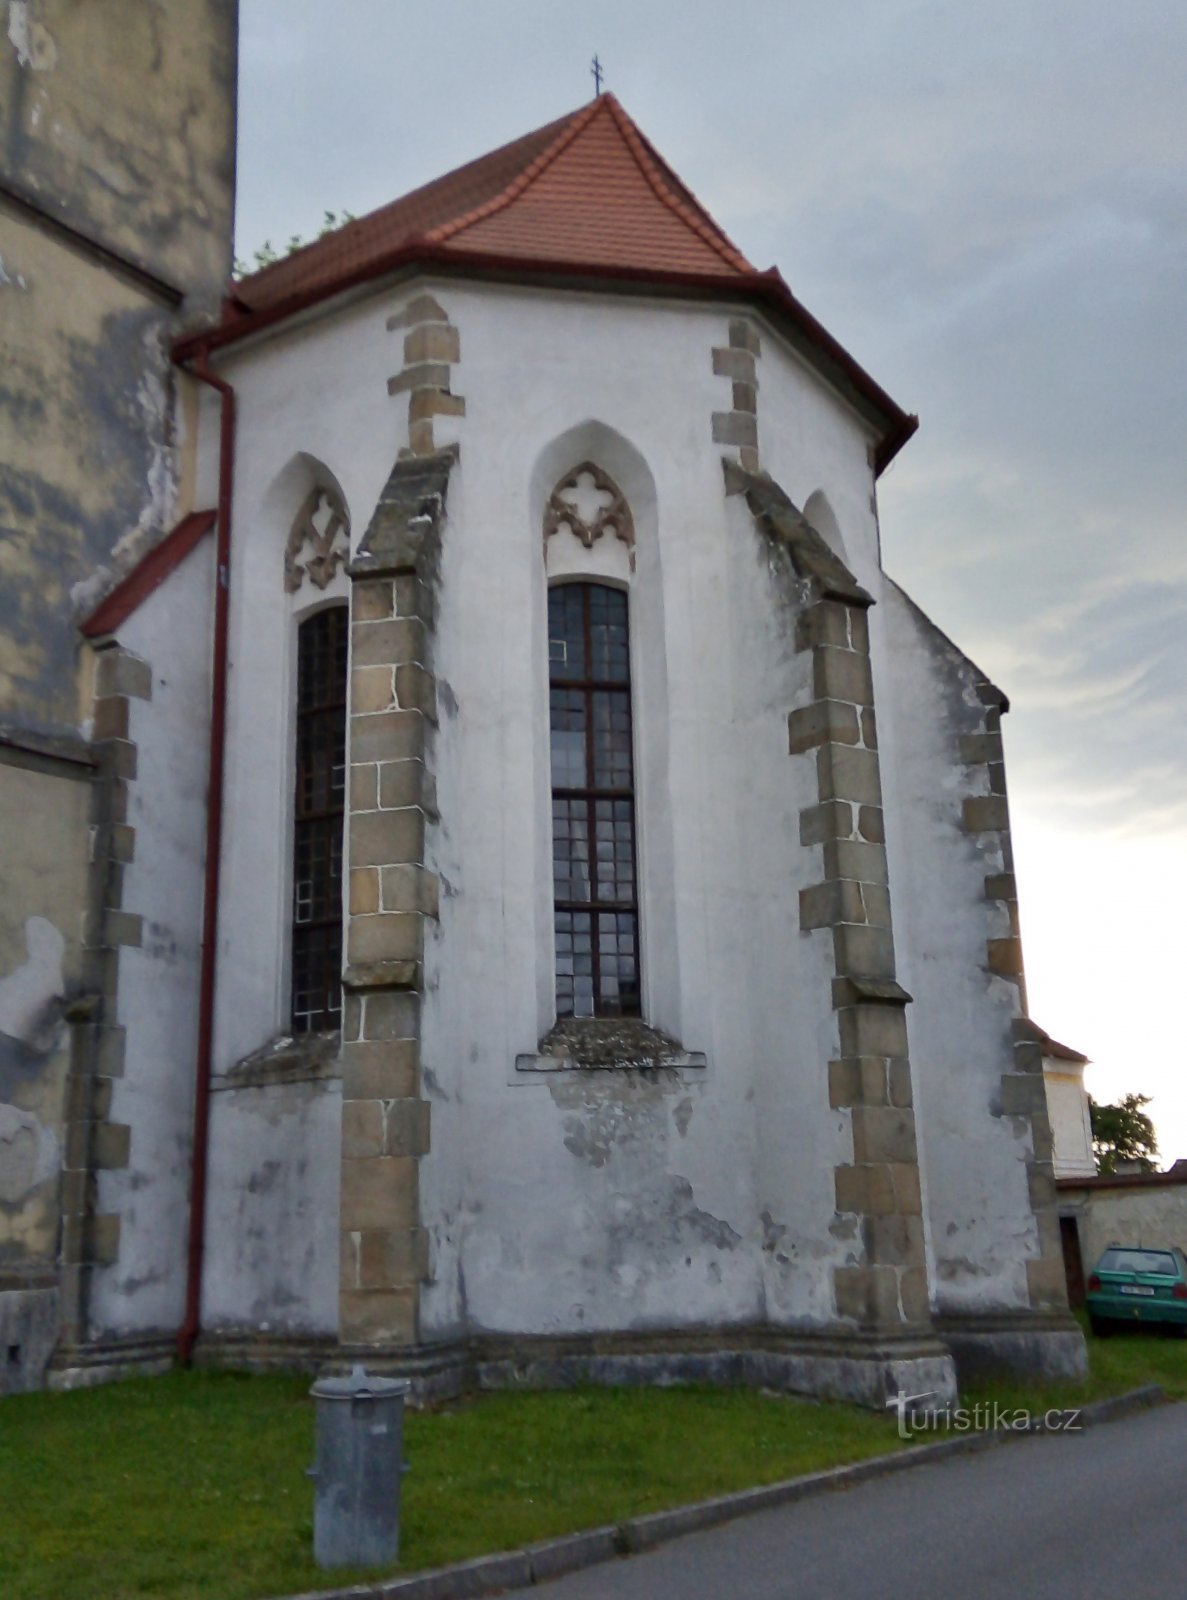 Gothic presbytery